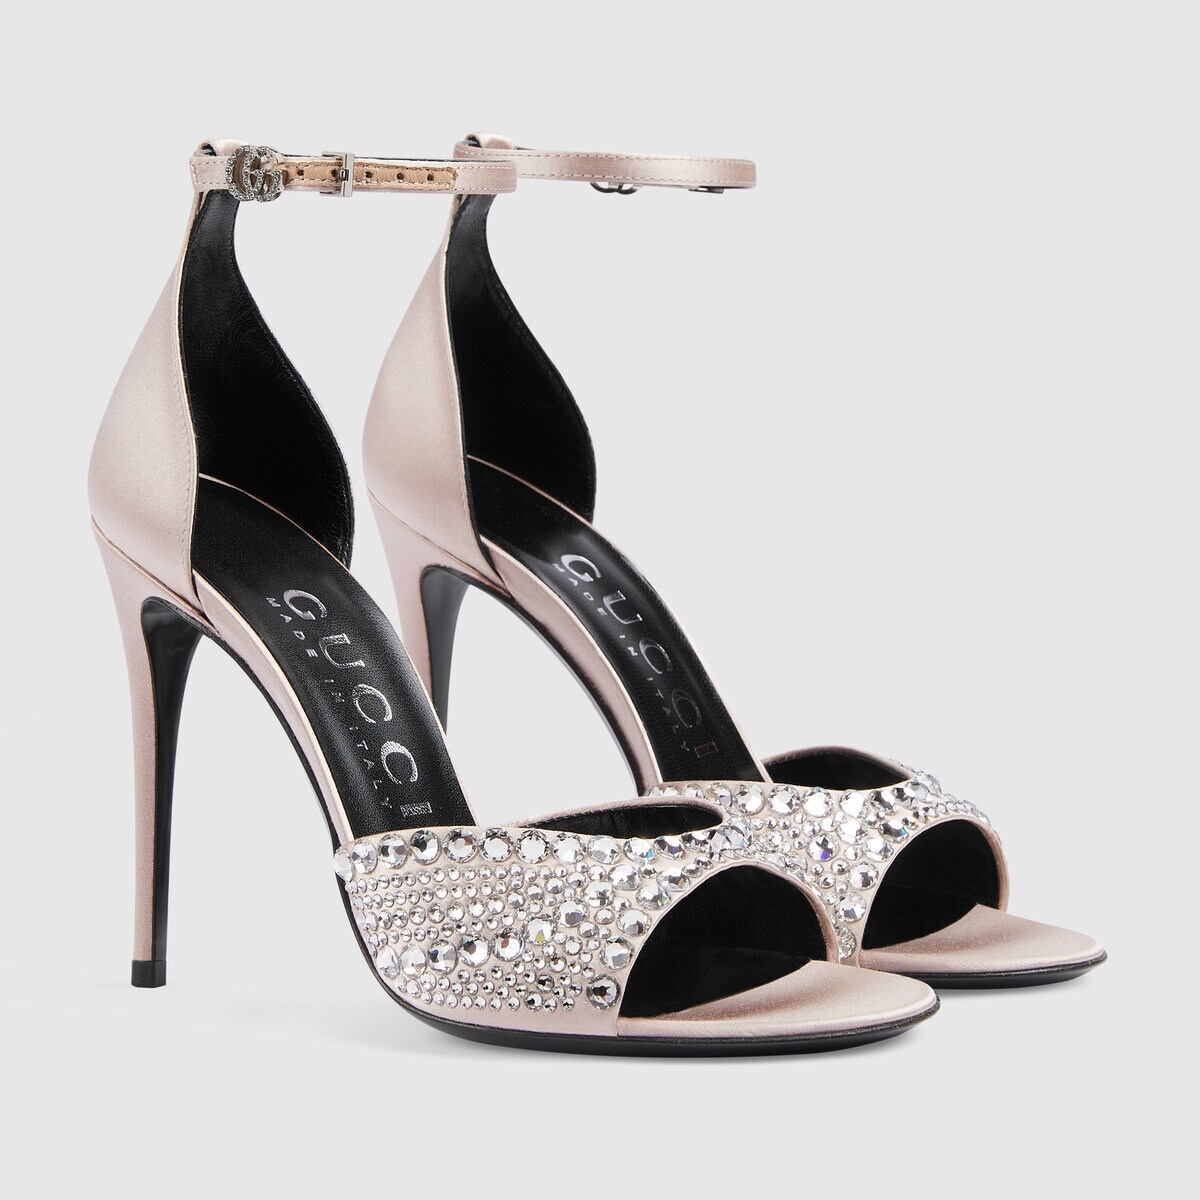 Women's high heel sandals with crystals - 2